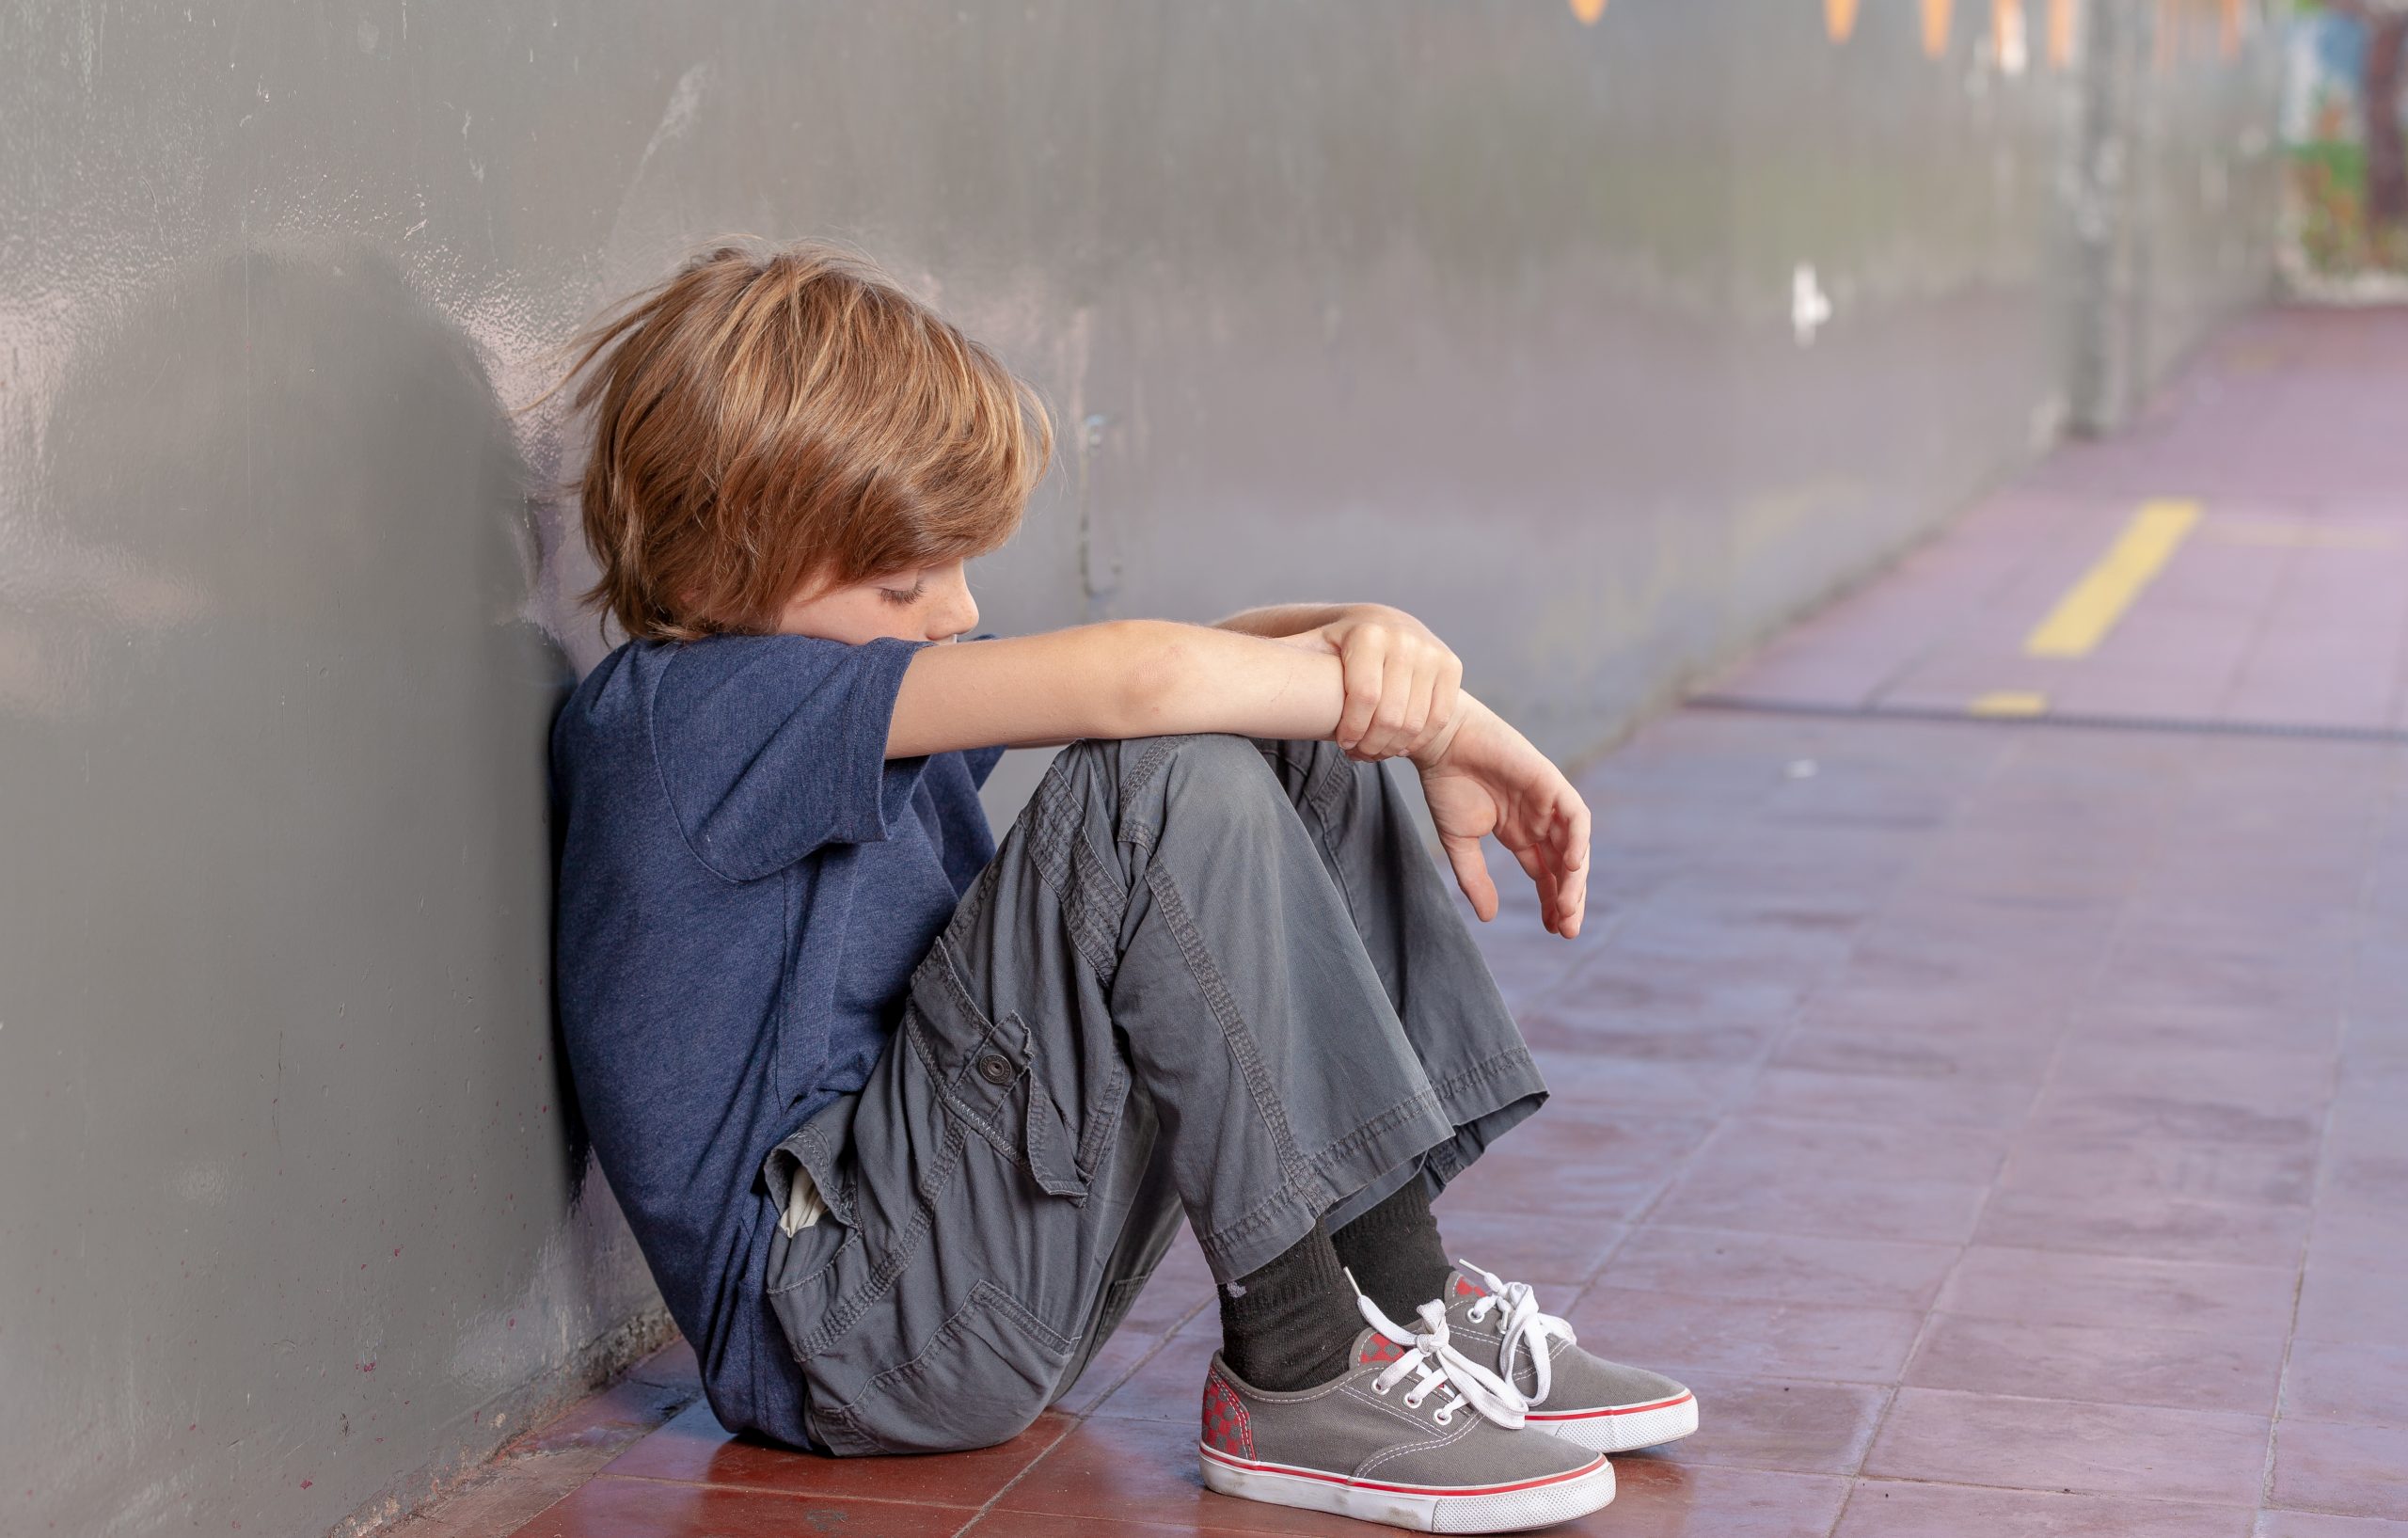 Chronic Child Neglect – 2013 (2CE)